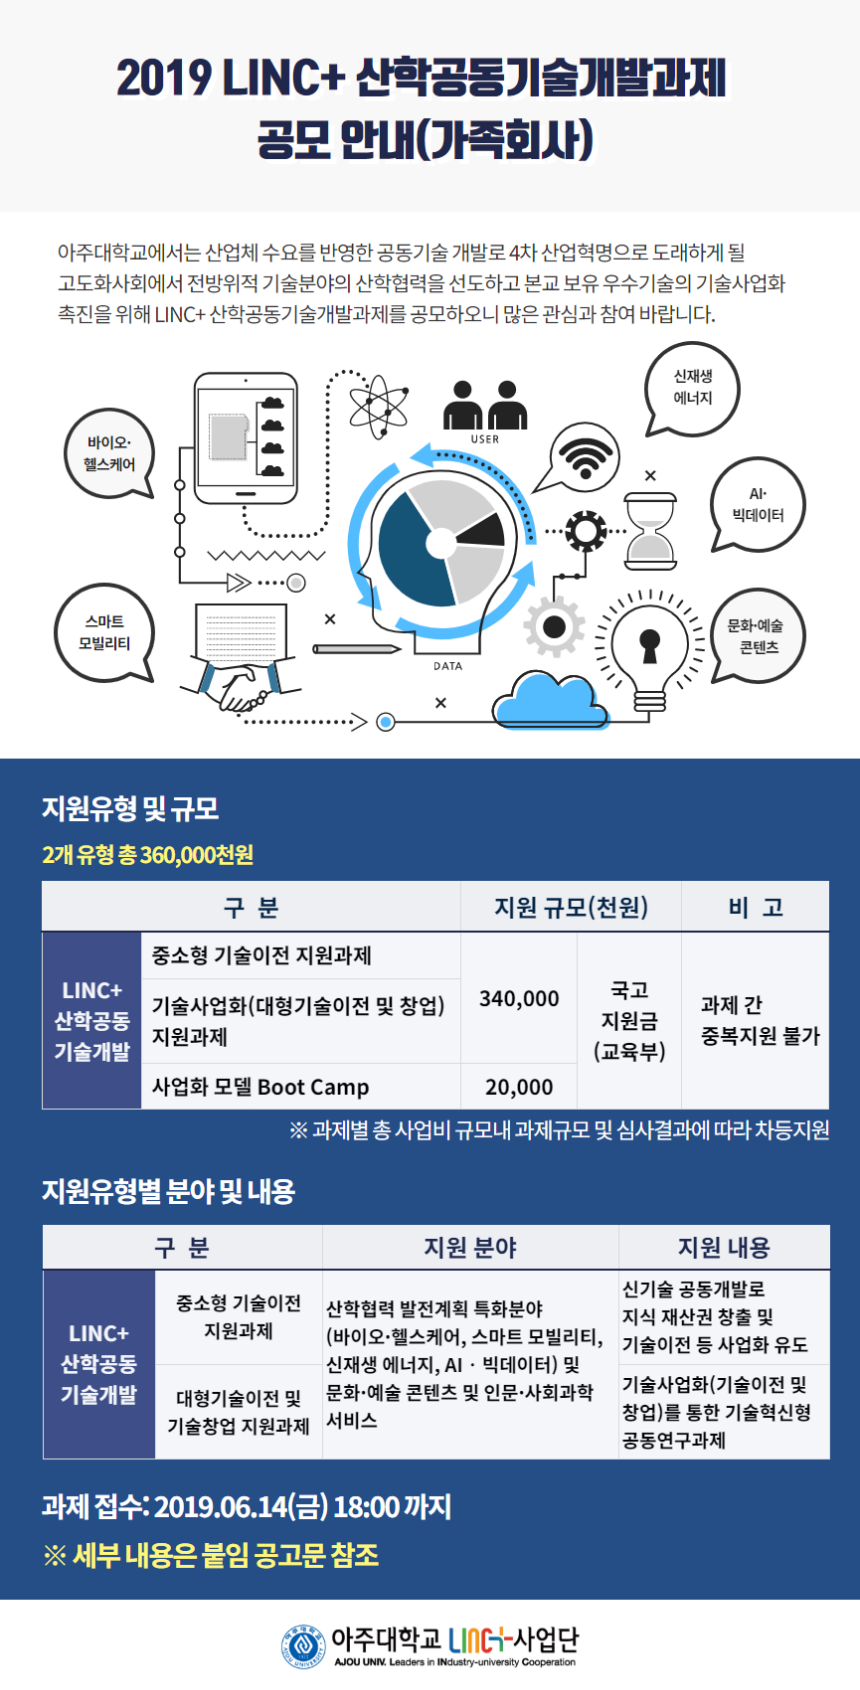 2019 LINC+ 과제 공고(가족회사, 링크홈피접수).png